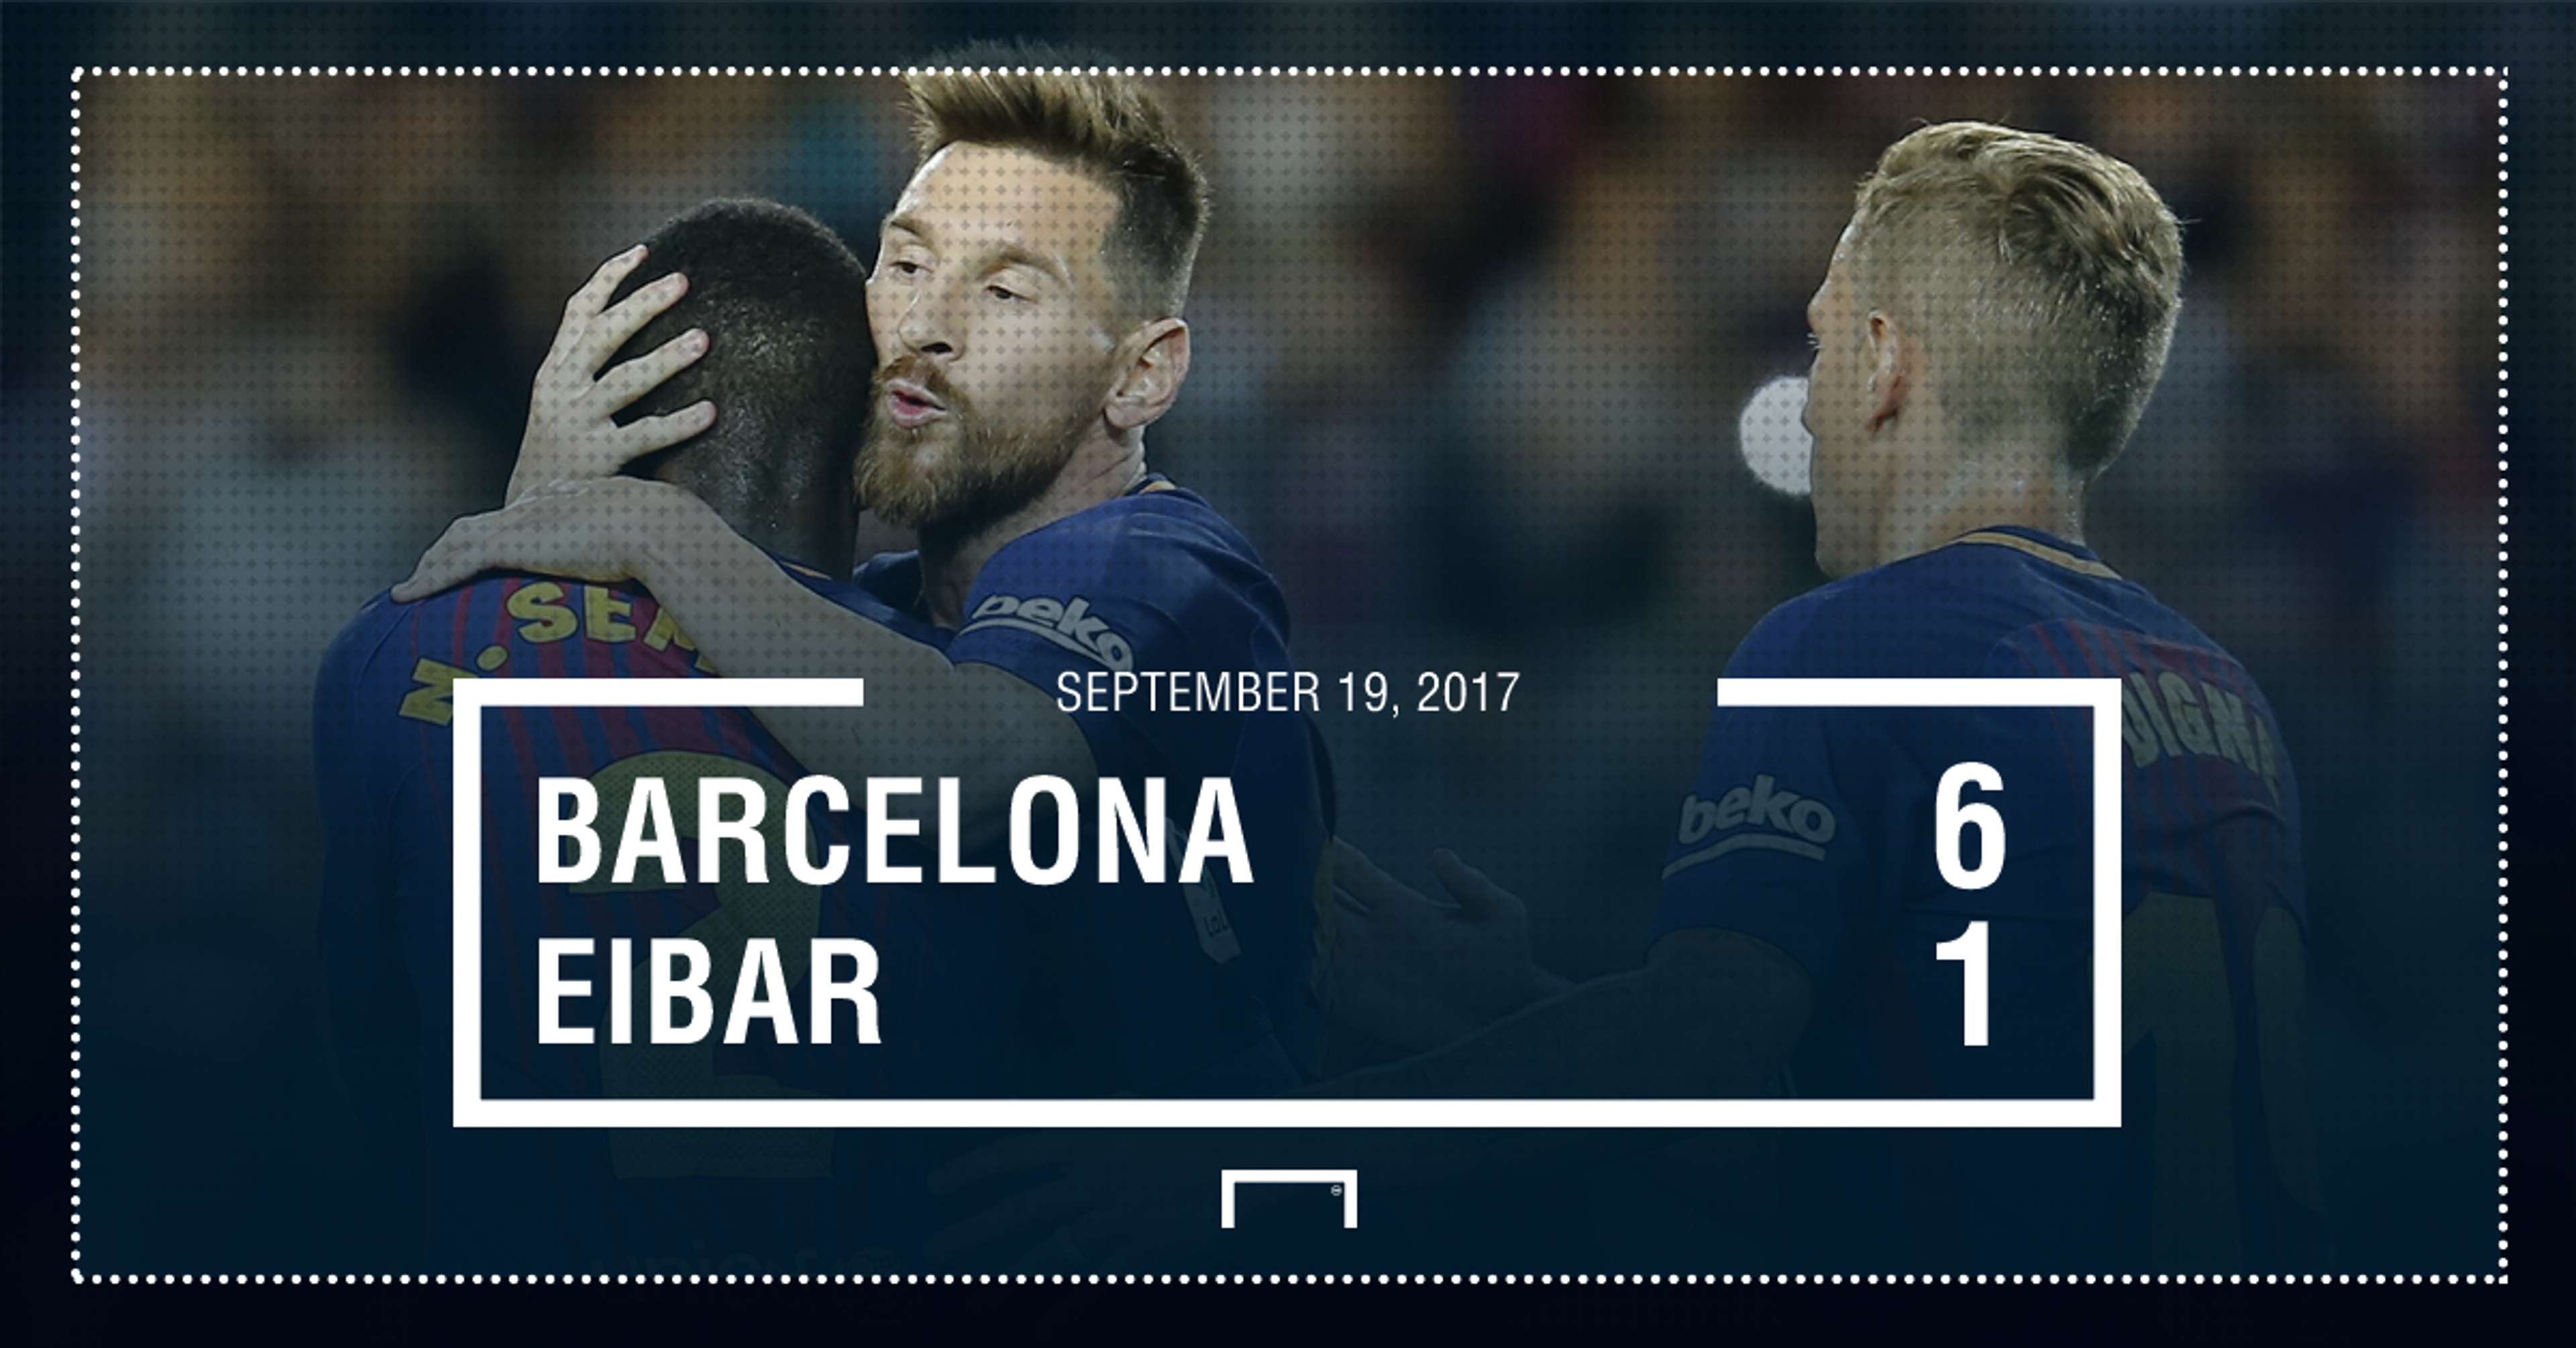 Barca Eibar score